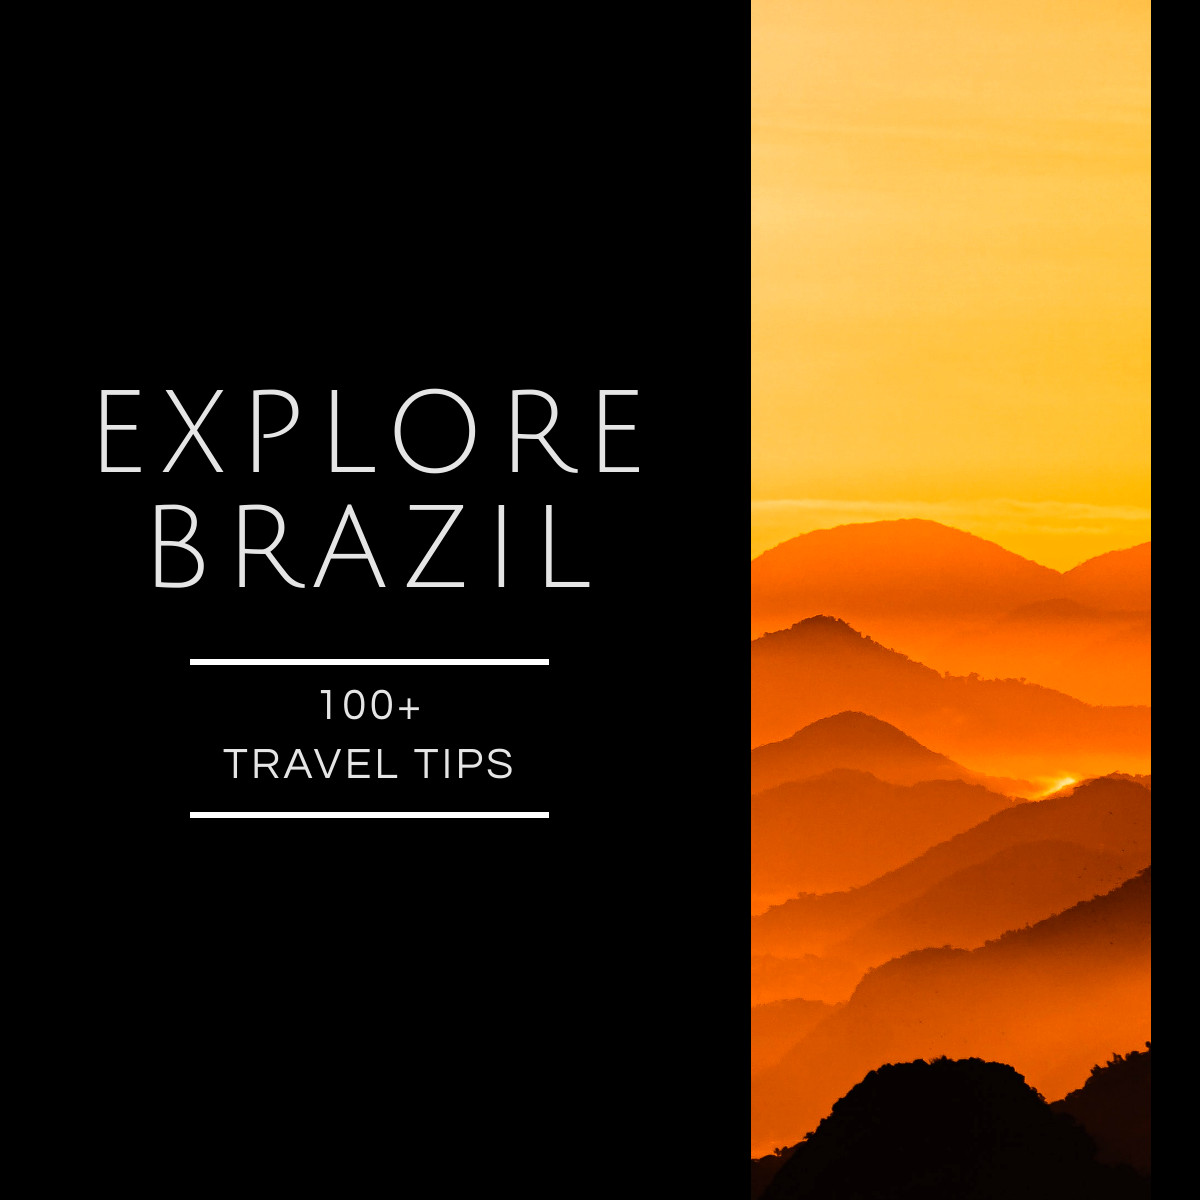 Travel Tips to Explore Brazil 